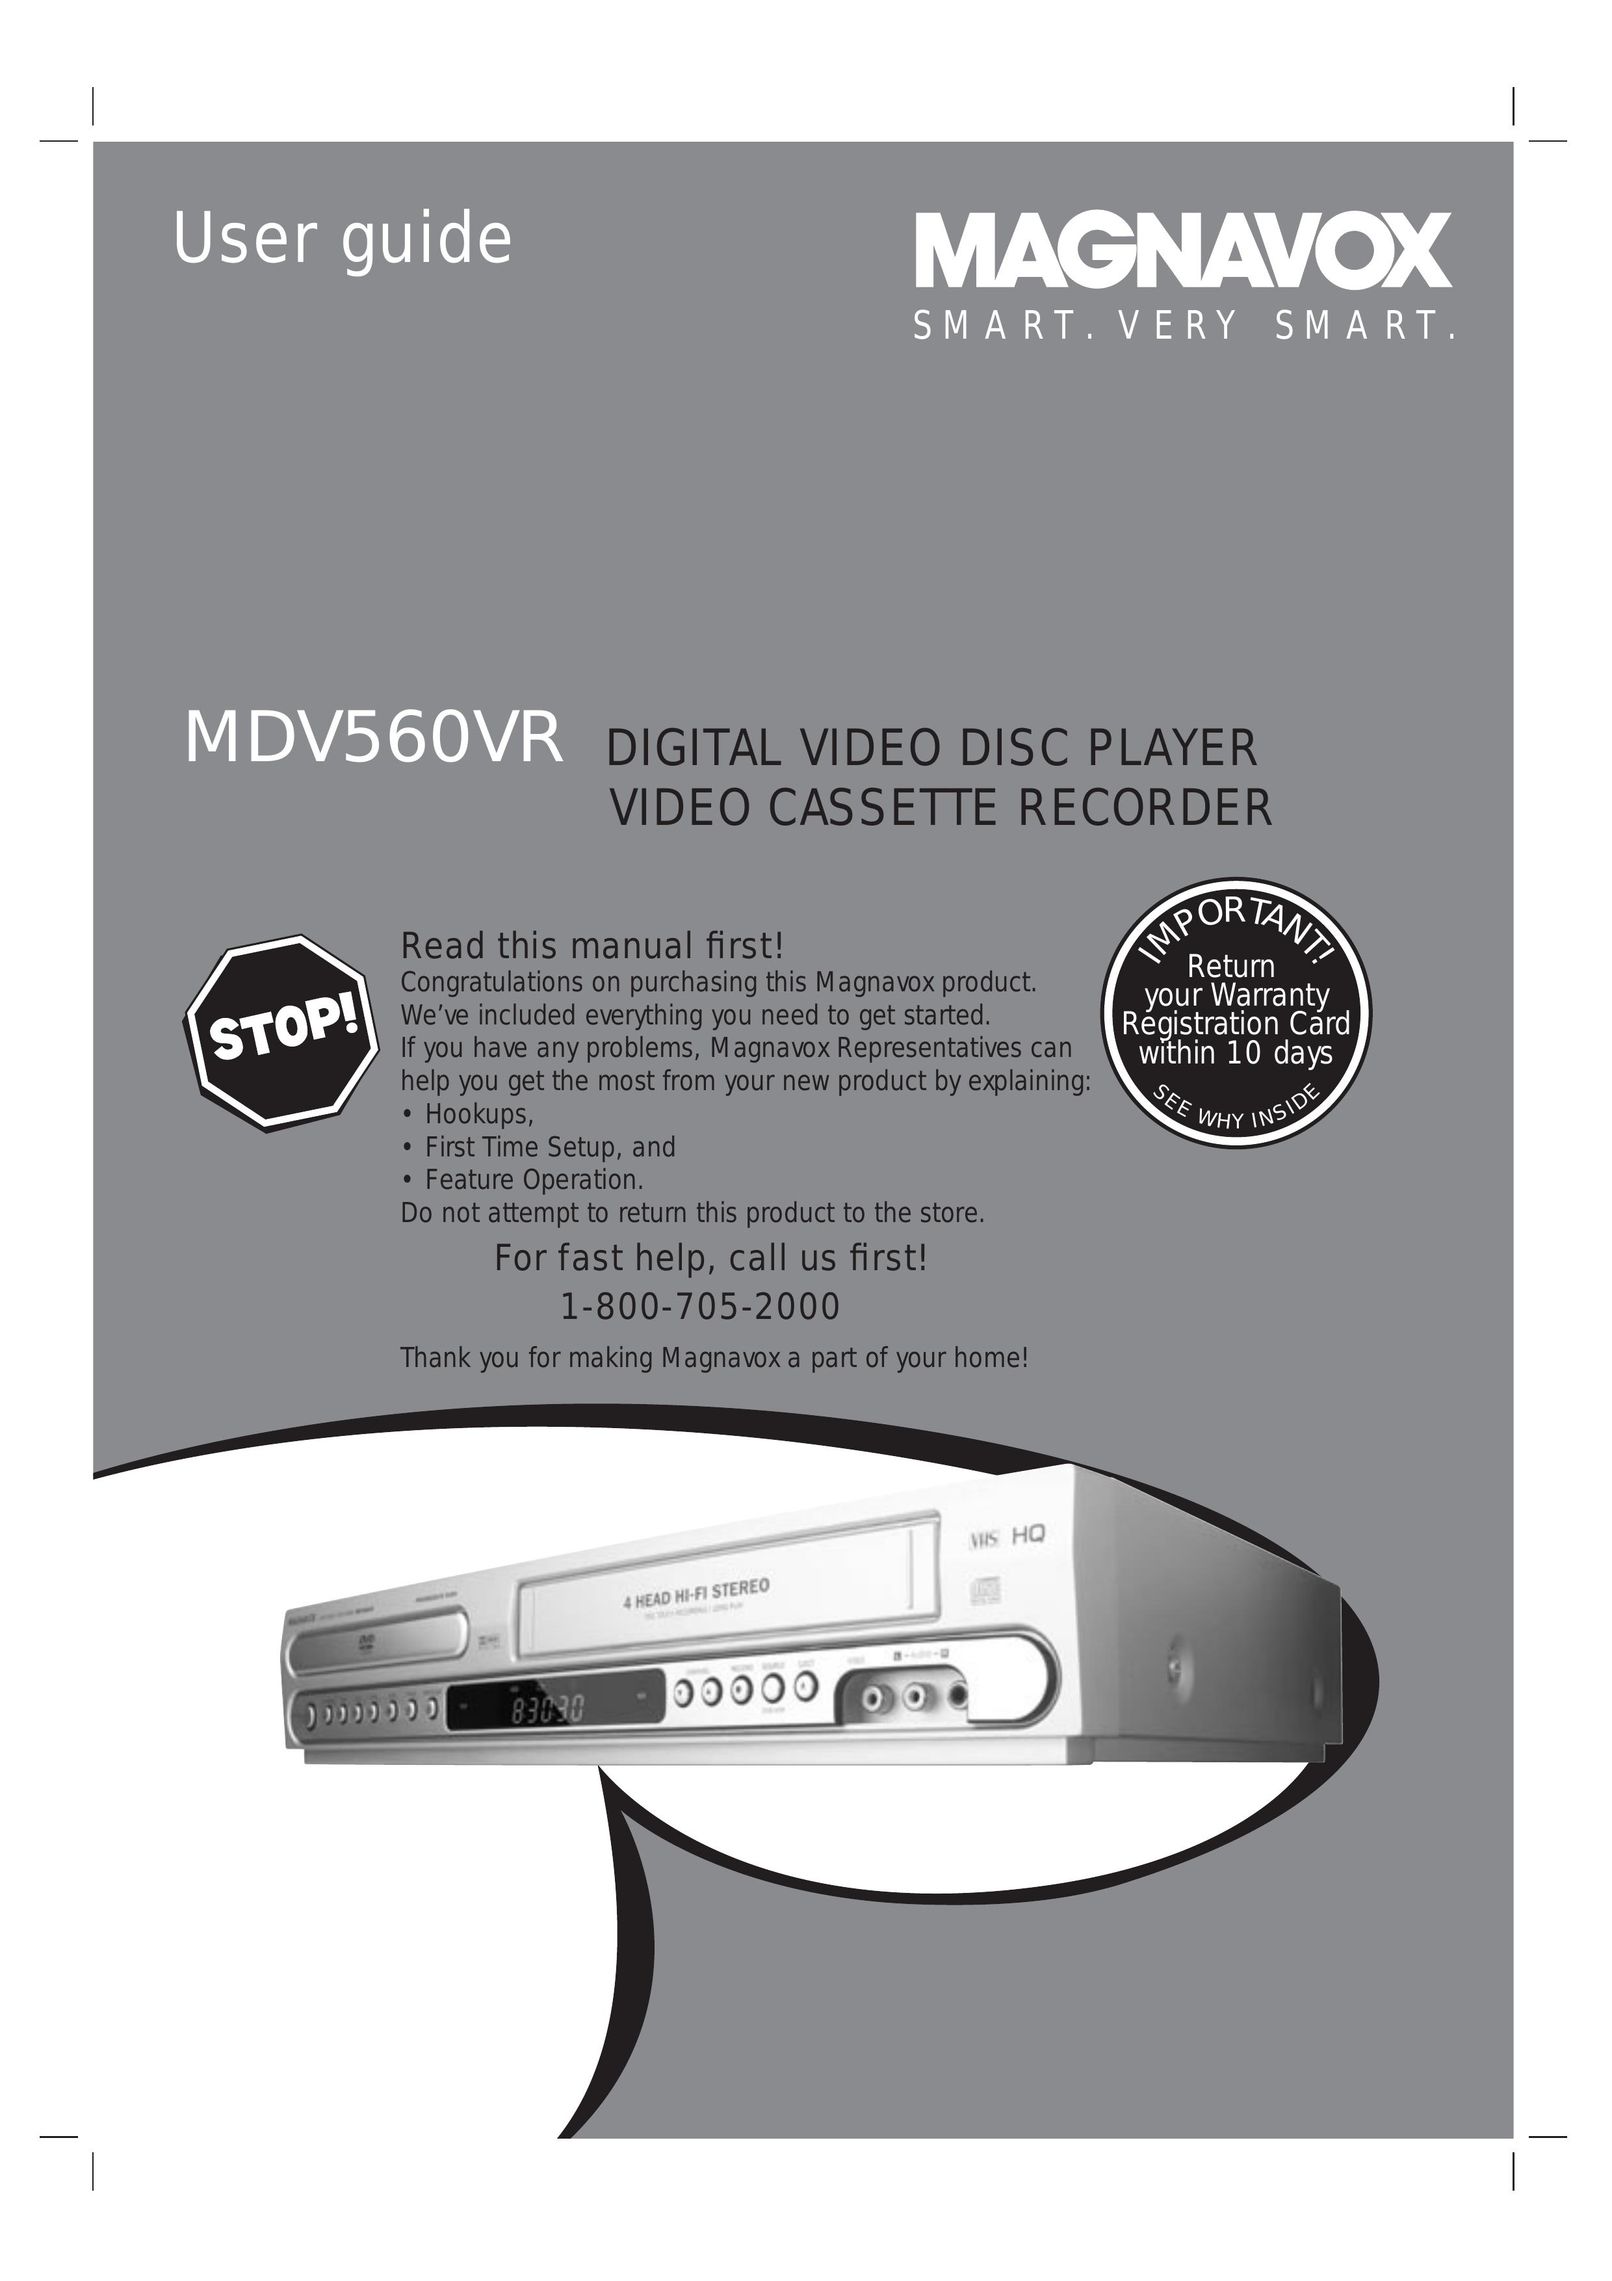 Magnavox MDV560VR/17 TV VCR Combo User Manual